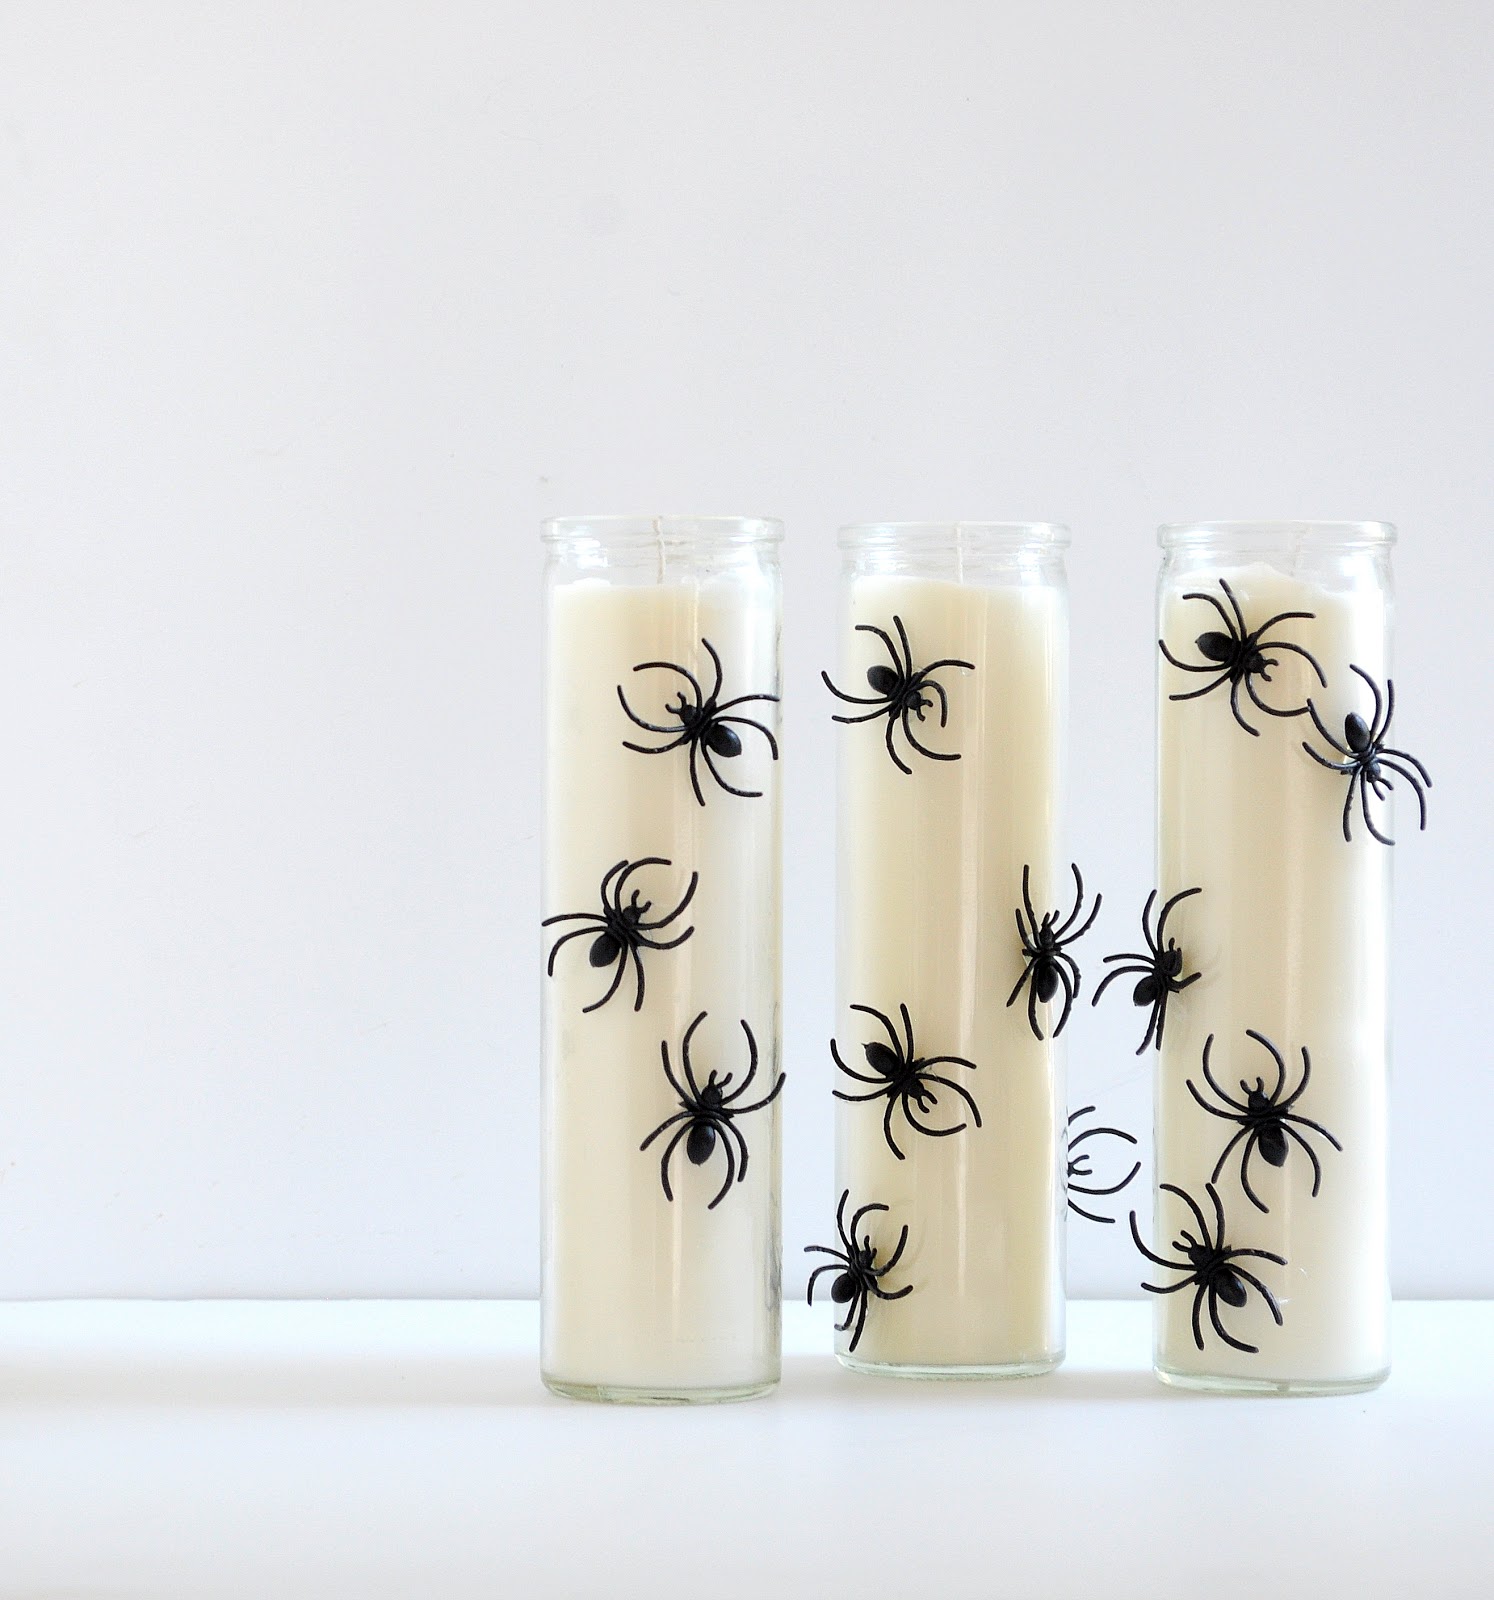 Spooky Spider Halloween Candles | DIY Halloween Decorations